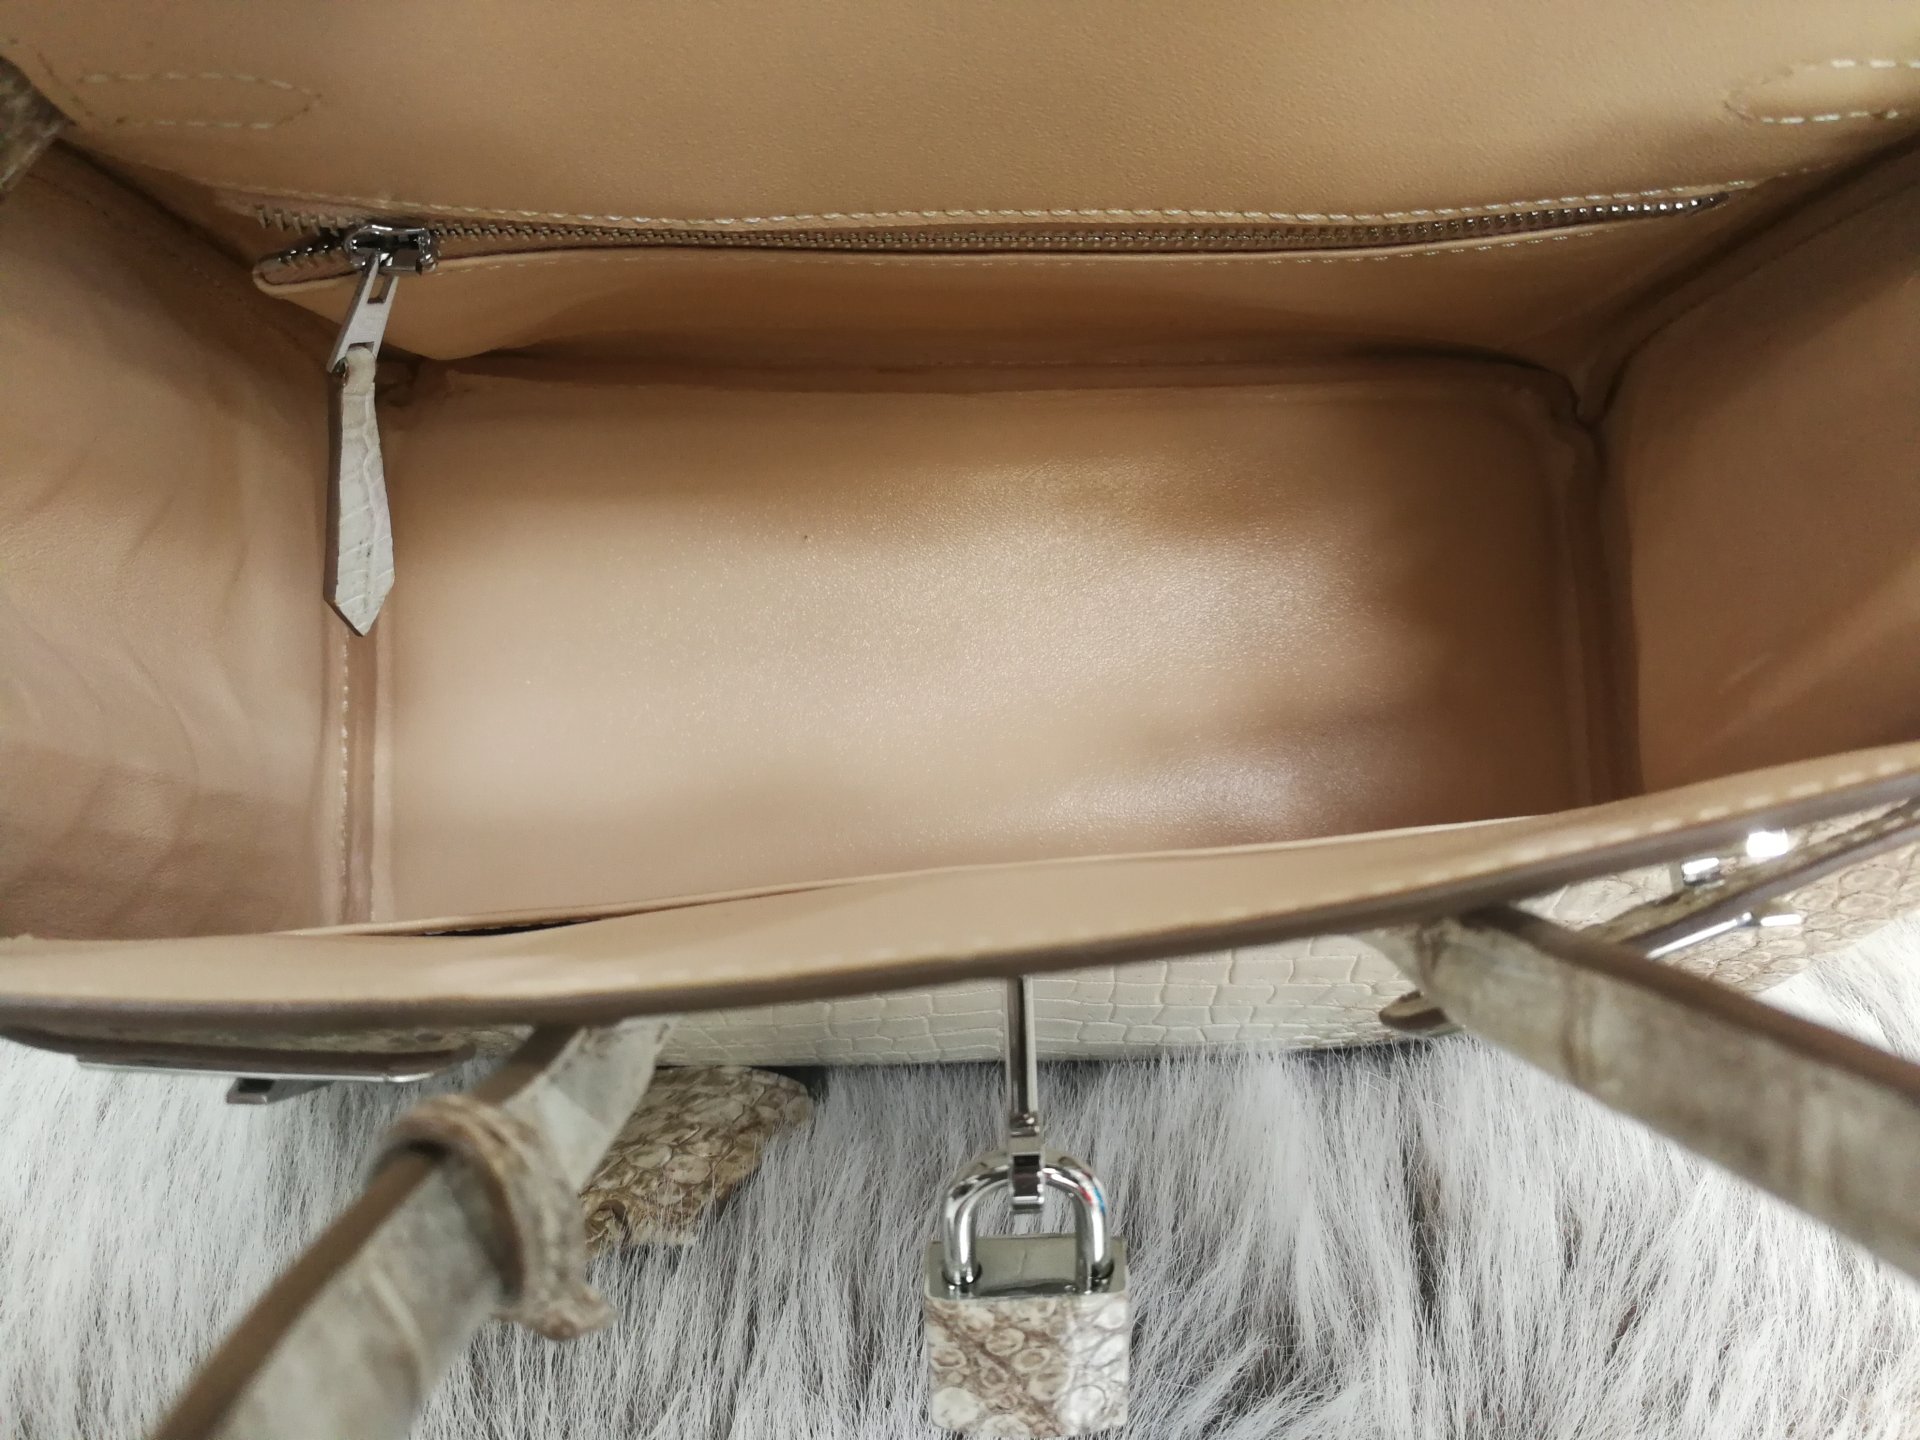 Luxury Genuine Crocodile Tote Bag/Handbag in Himalayan Natural White Colour  Crocodile Skin #CRW214H-WHI-30CM